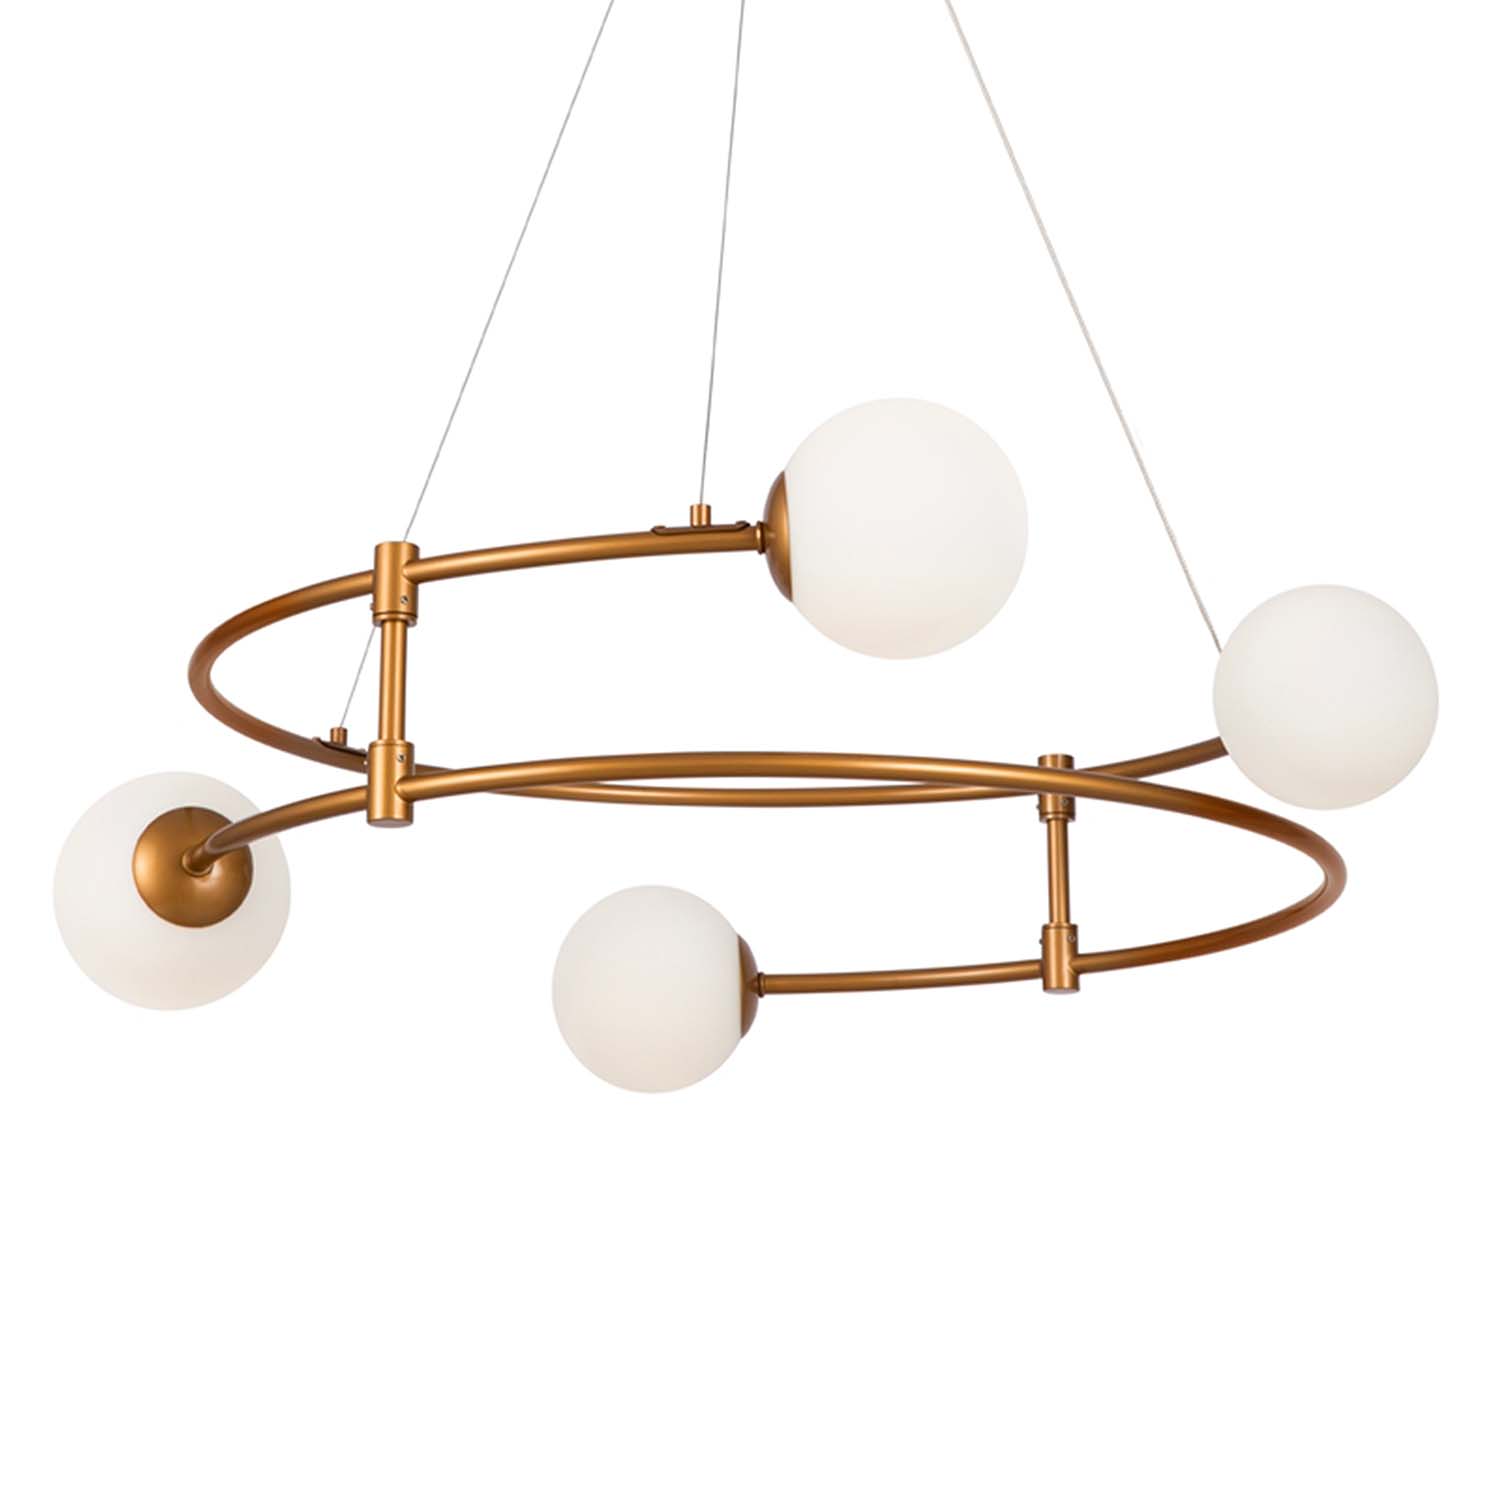 BALANCE - Golden circular chandelier with contemporary glass balls